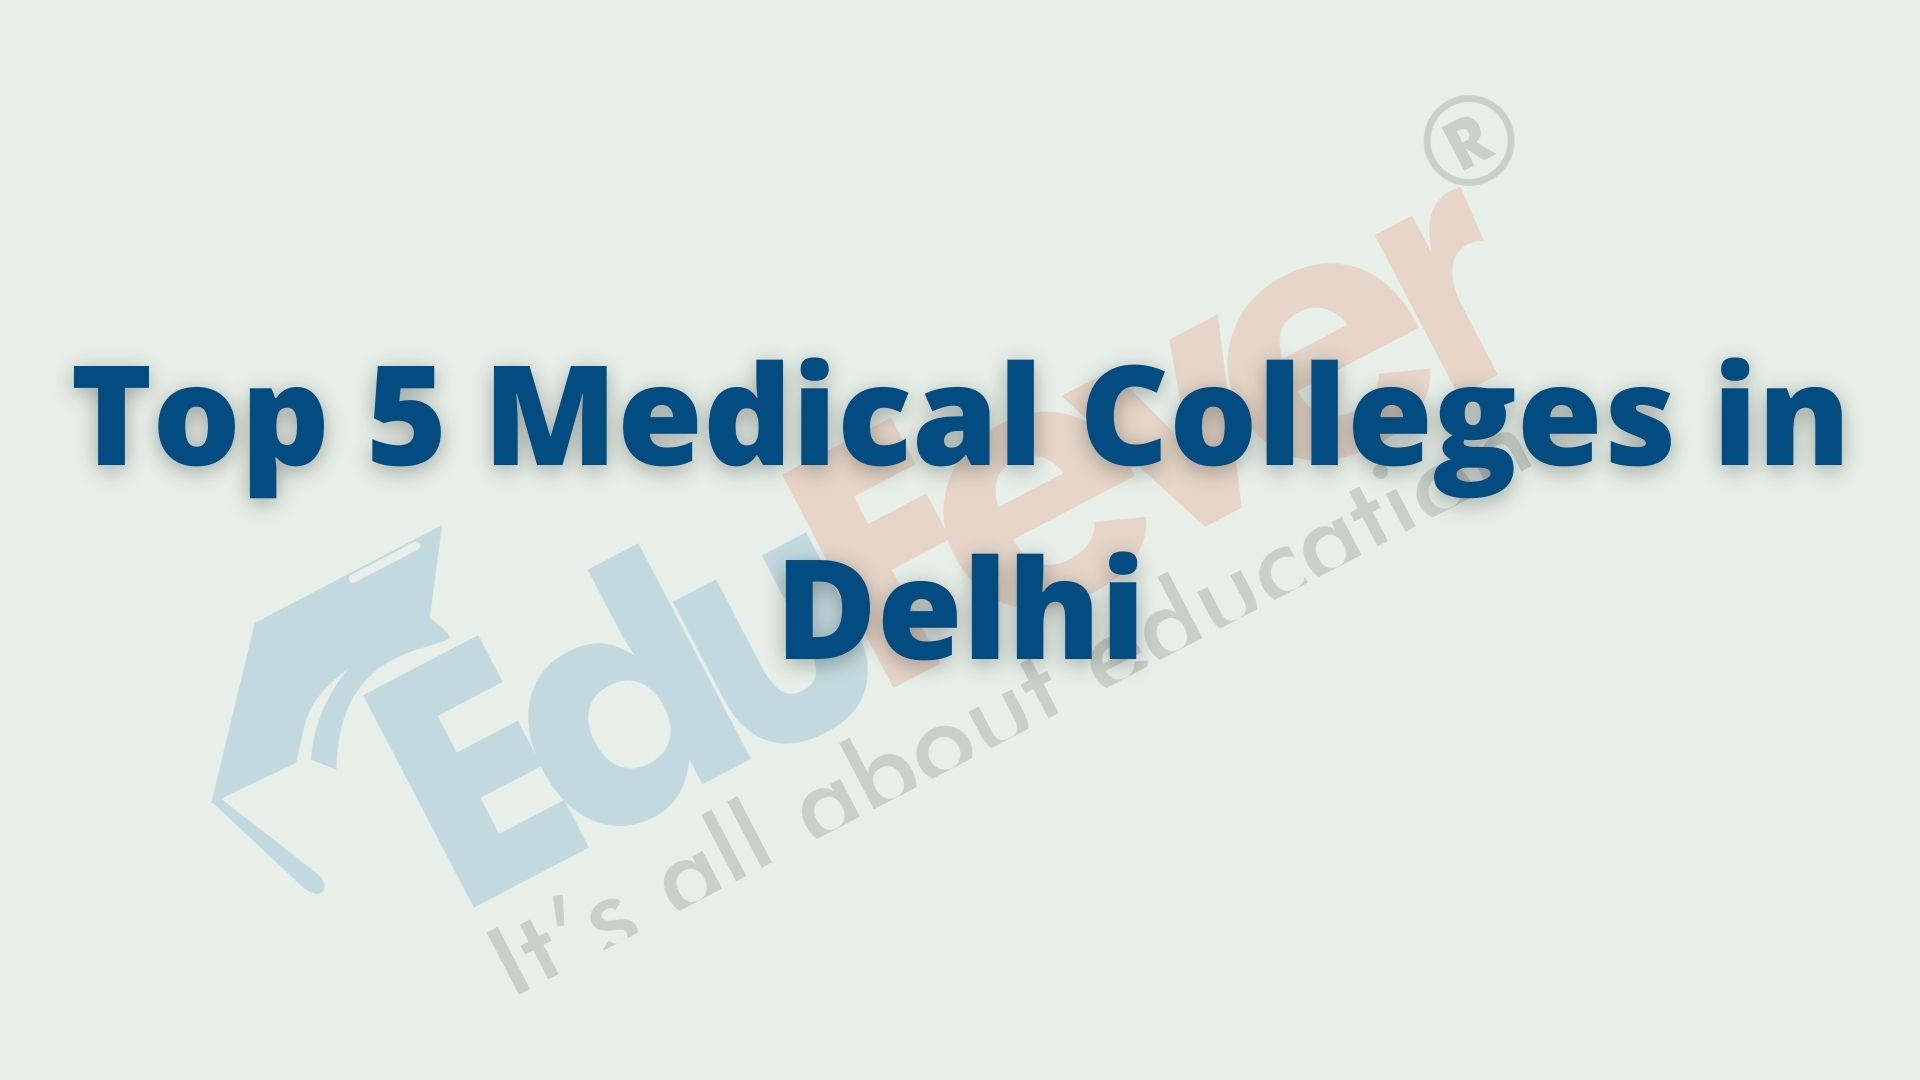 Top 5 Medical Colleges in Delhi